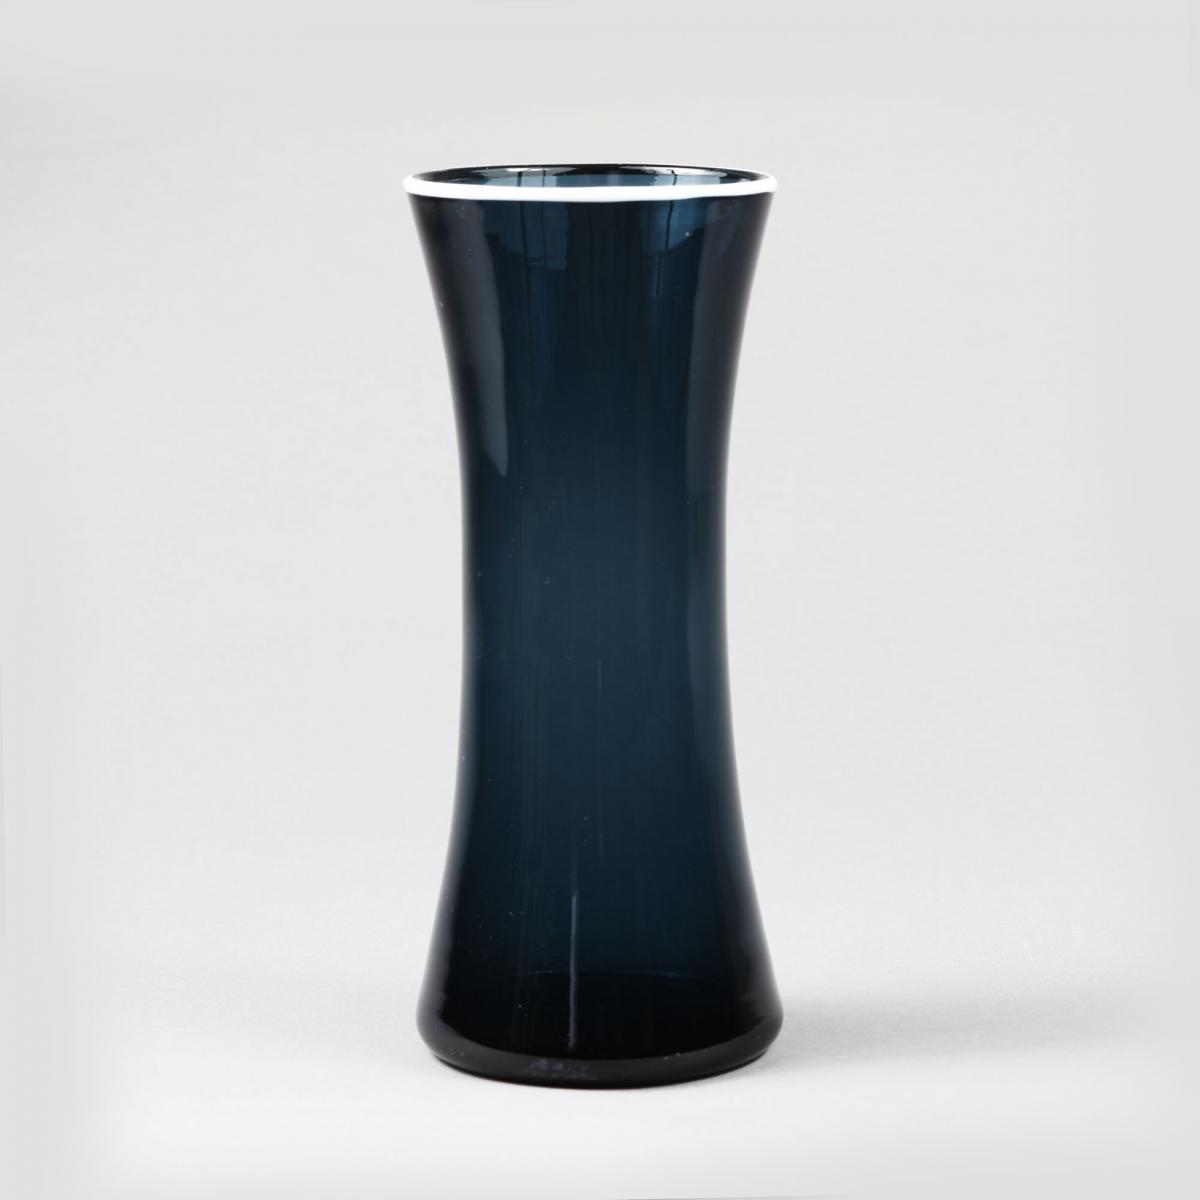 A Whitefriars midnight blue glass vase